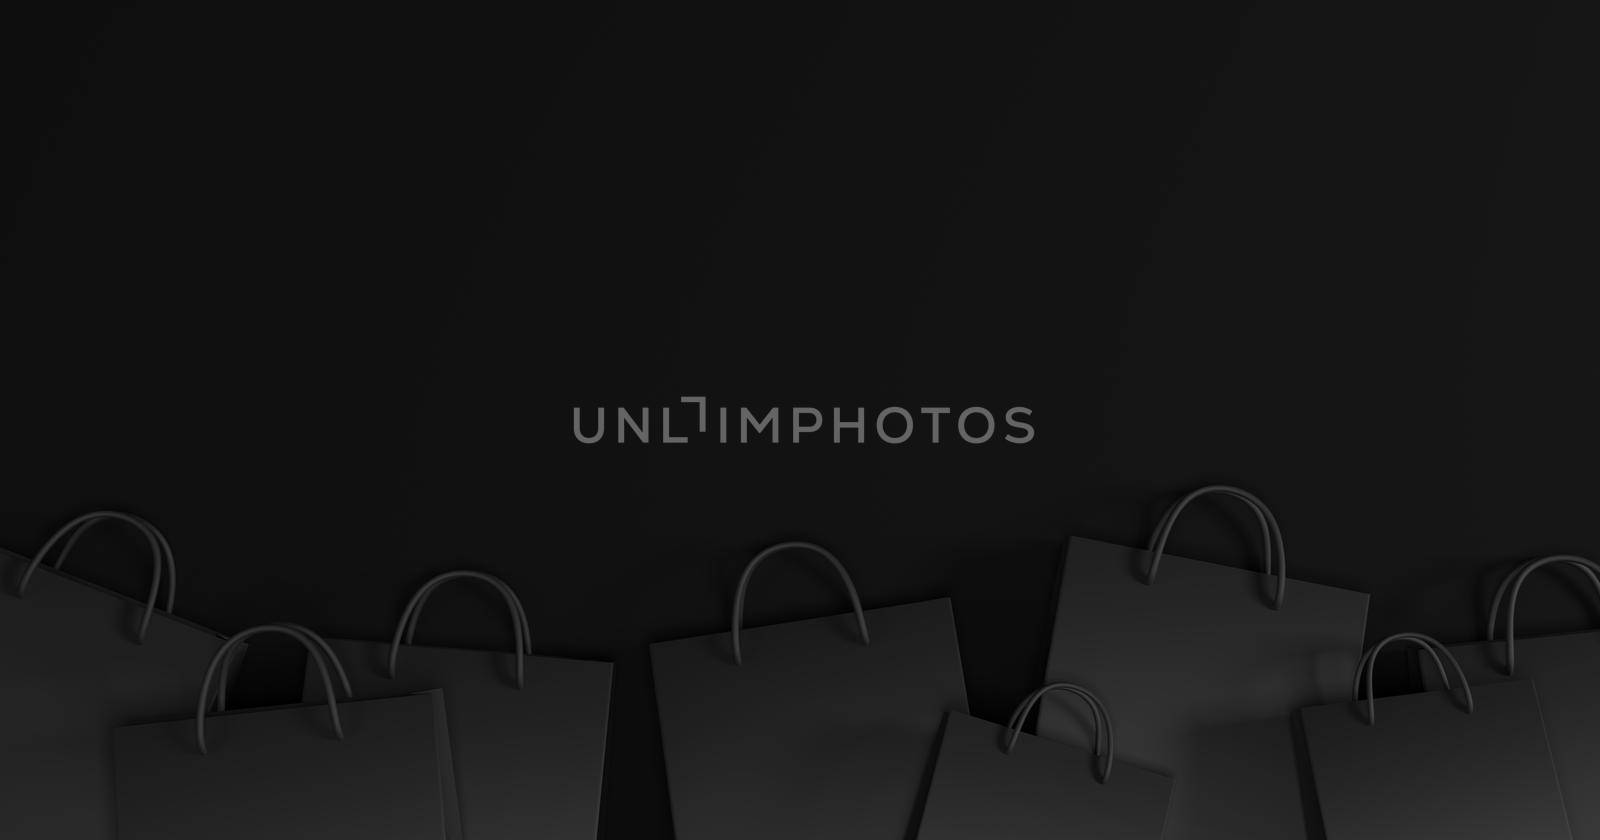 Black friday sale banner concept design of shopping bag on black background with copy space 3D render